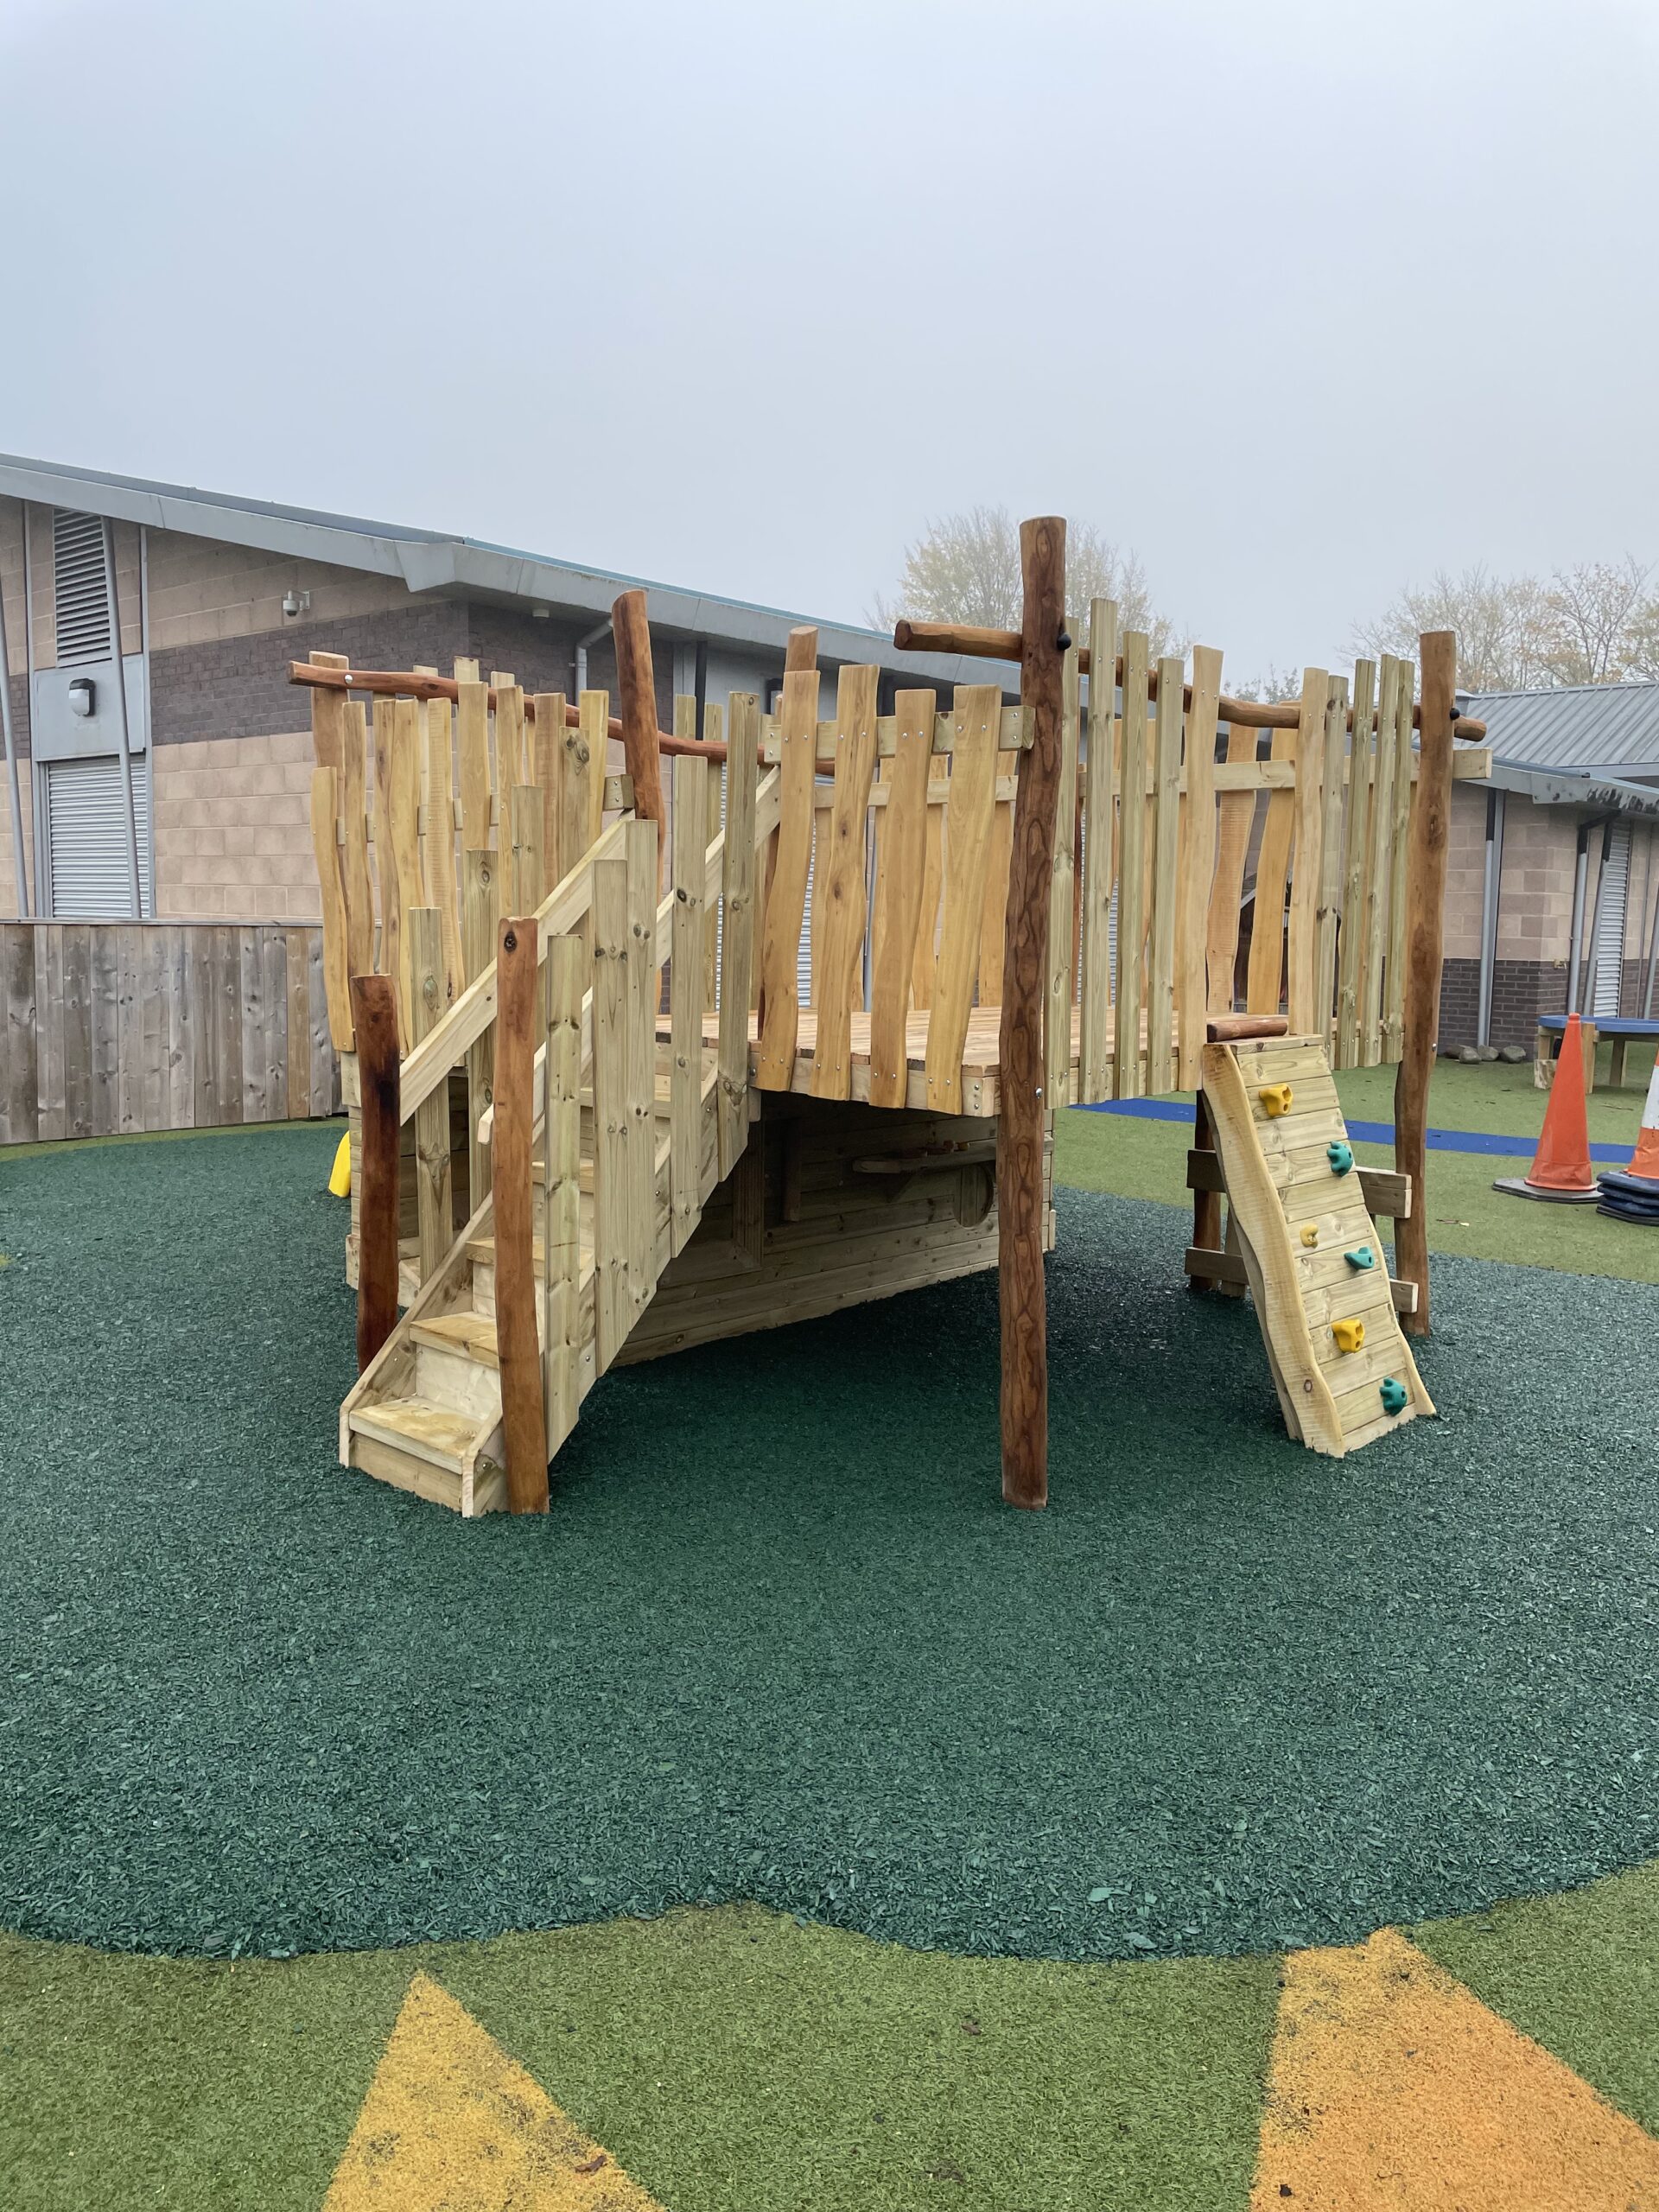 Playground climbing frame